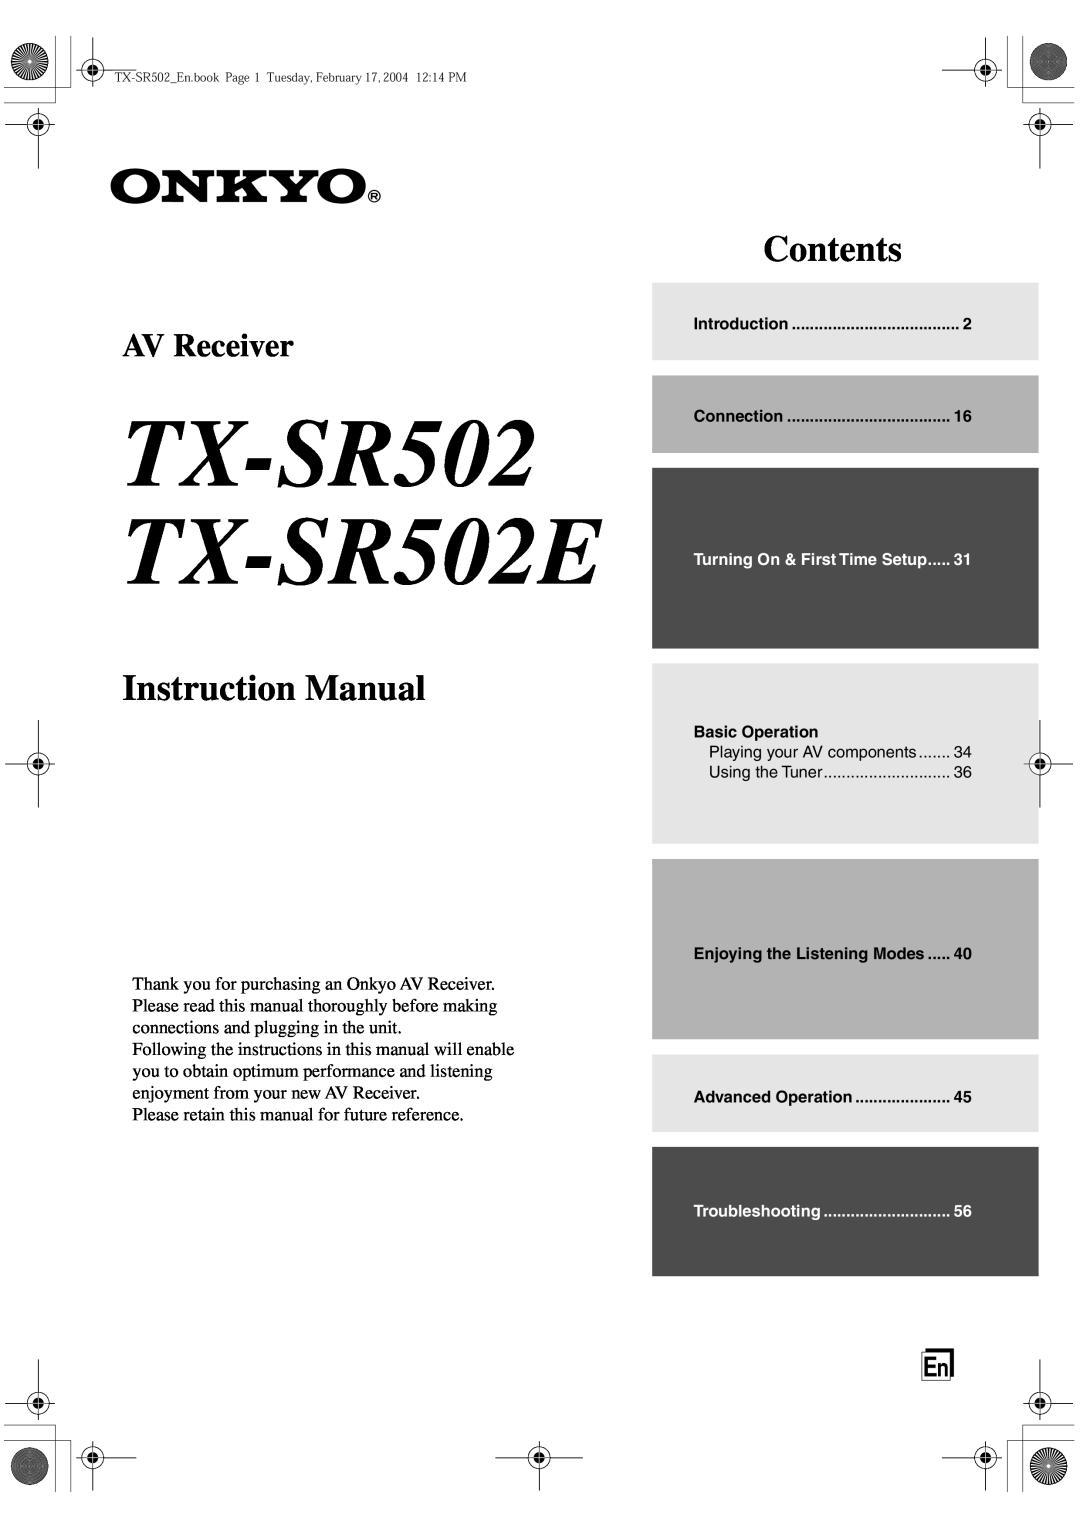 Onkyo instruction manual TX-SR502 TX-SR502E, Contents, AV Receiver 